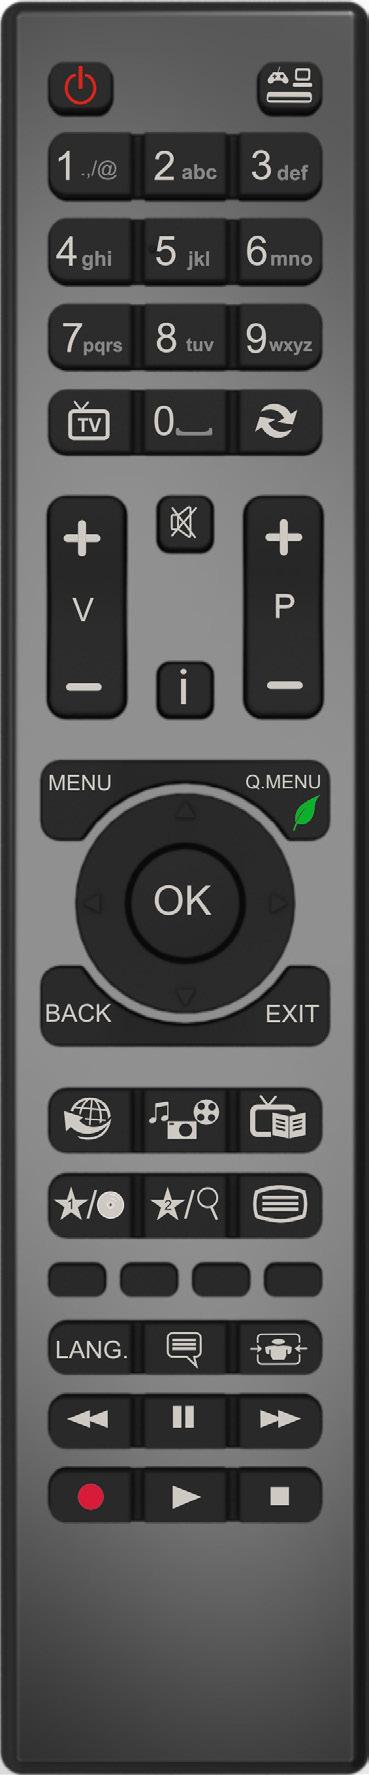 Viewing remote control - DVD 1. Standby 2. TV Menu 3. OK / Select 4. Back 5. Angel 6. Display / DVD Menu 7. Repeat 8. Zoom 9. Language selection 10. Rapid reverse 11.